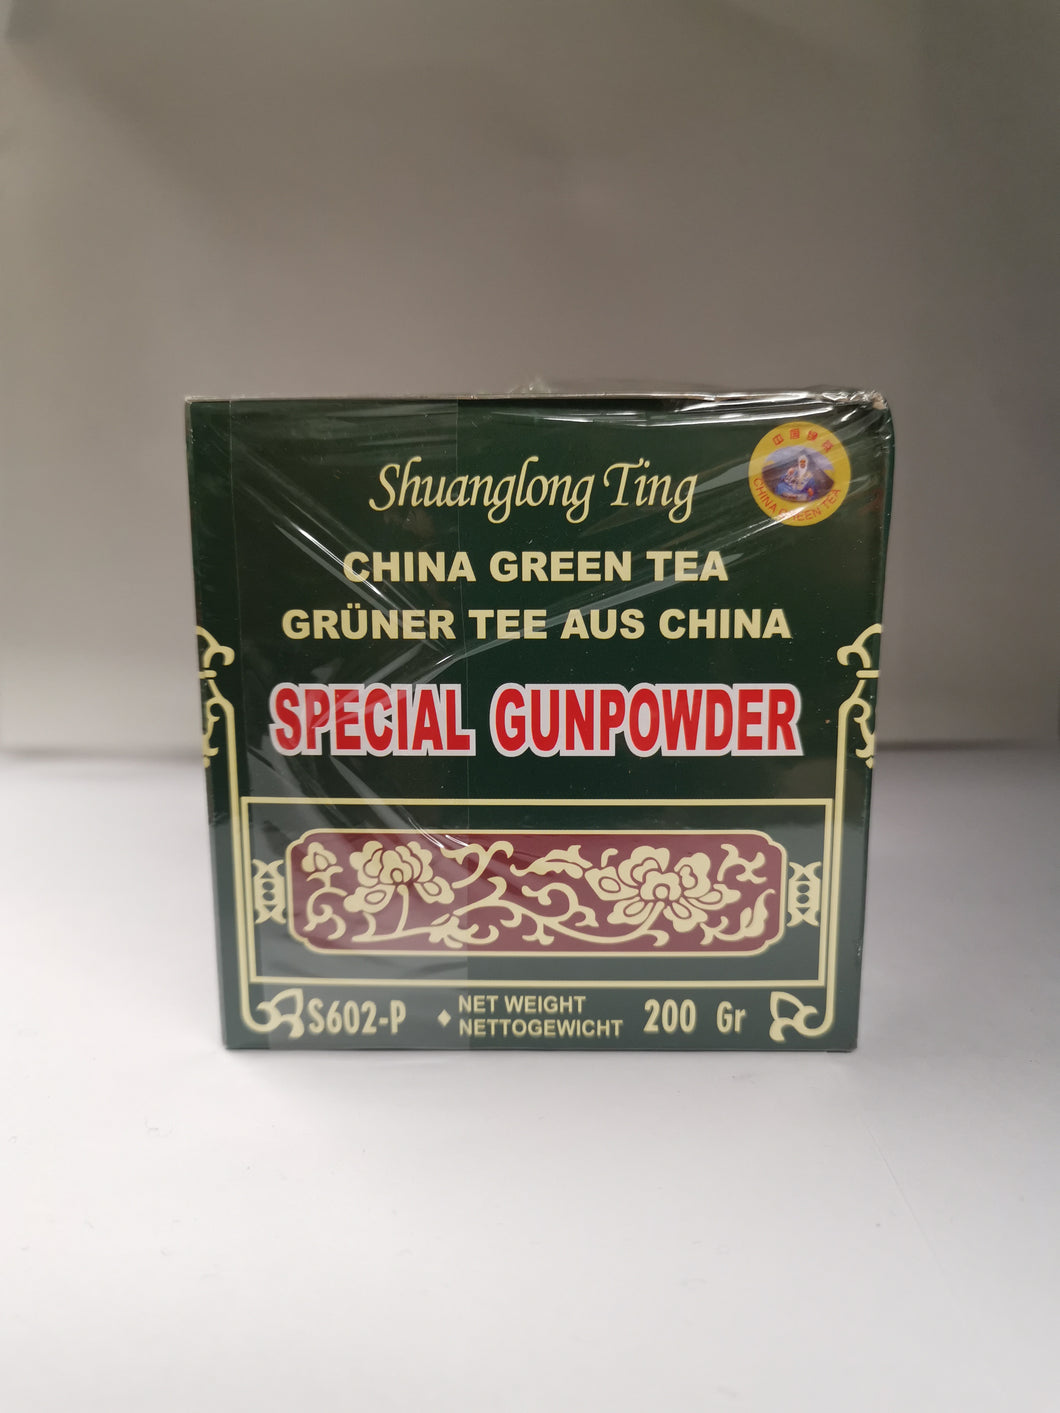 Shuanglong Ting China Green Tea Special Gunpowder